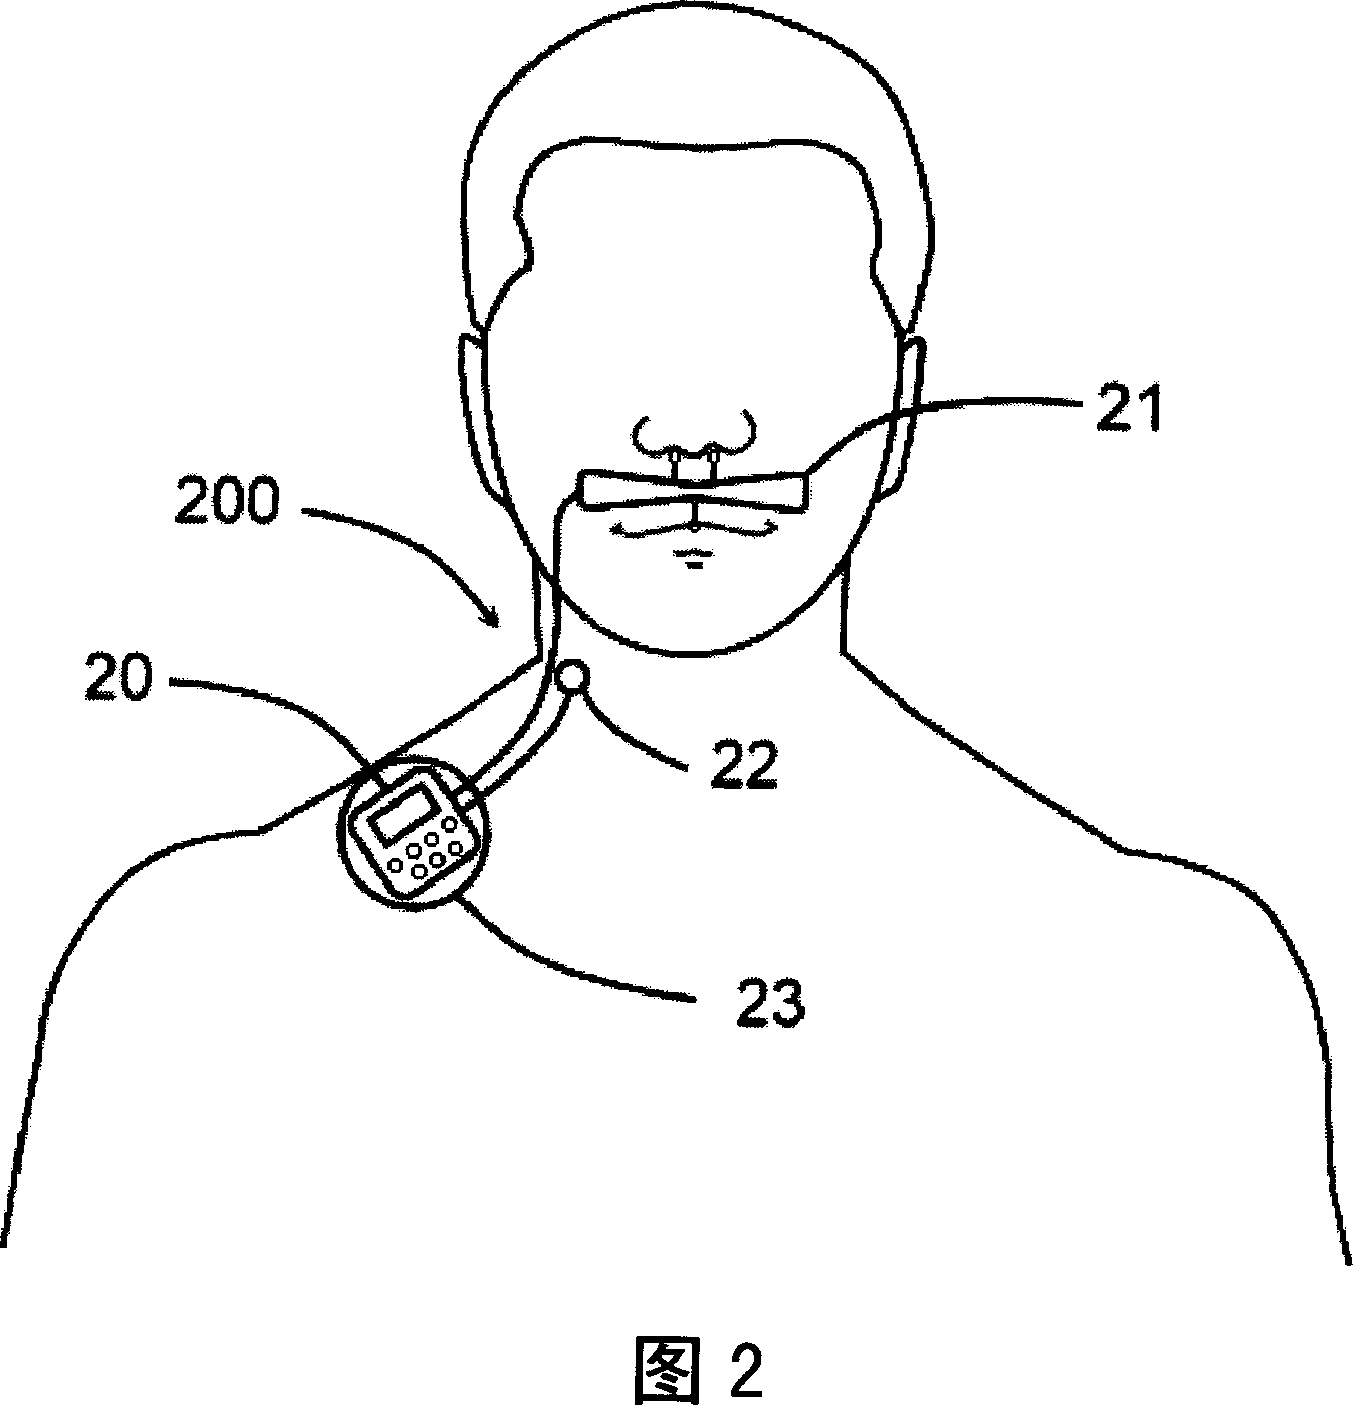 Apparatus for observing sleep breathing status